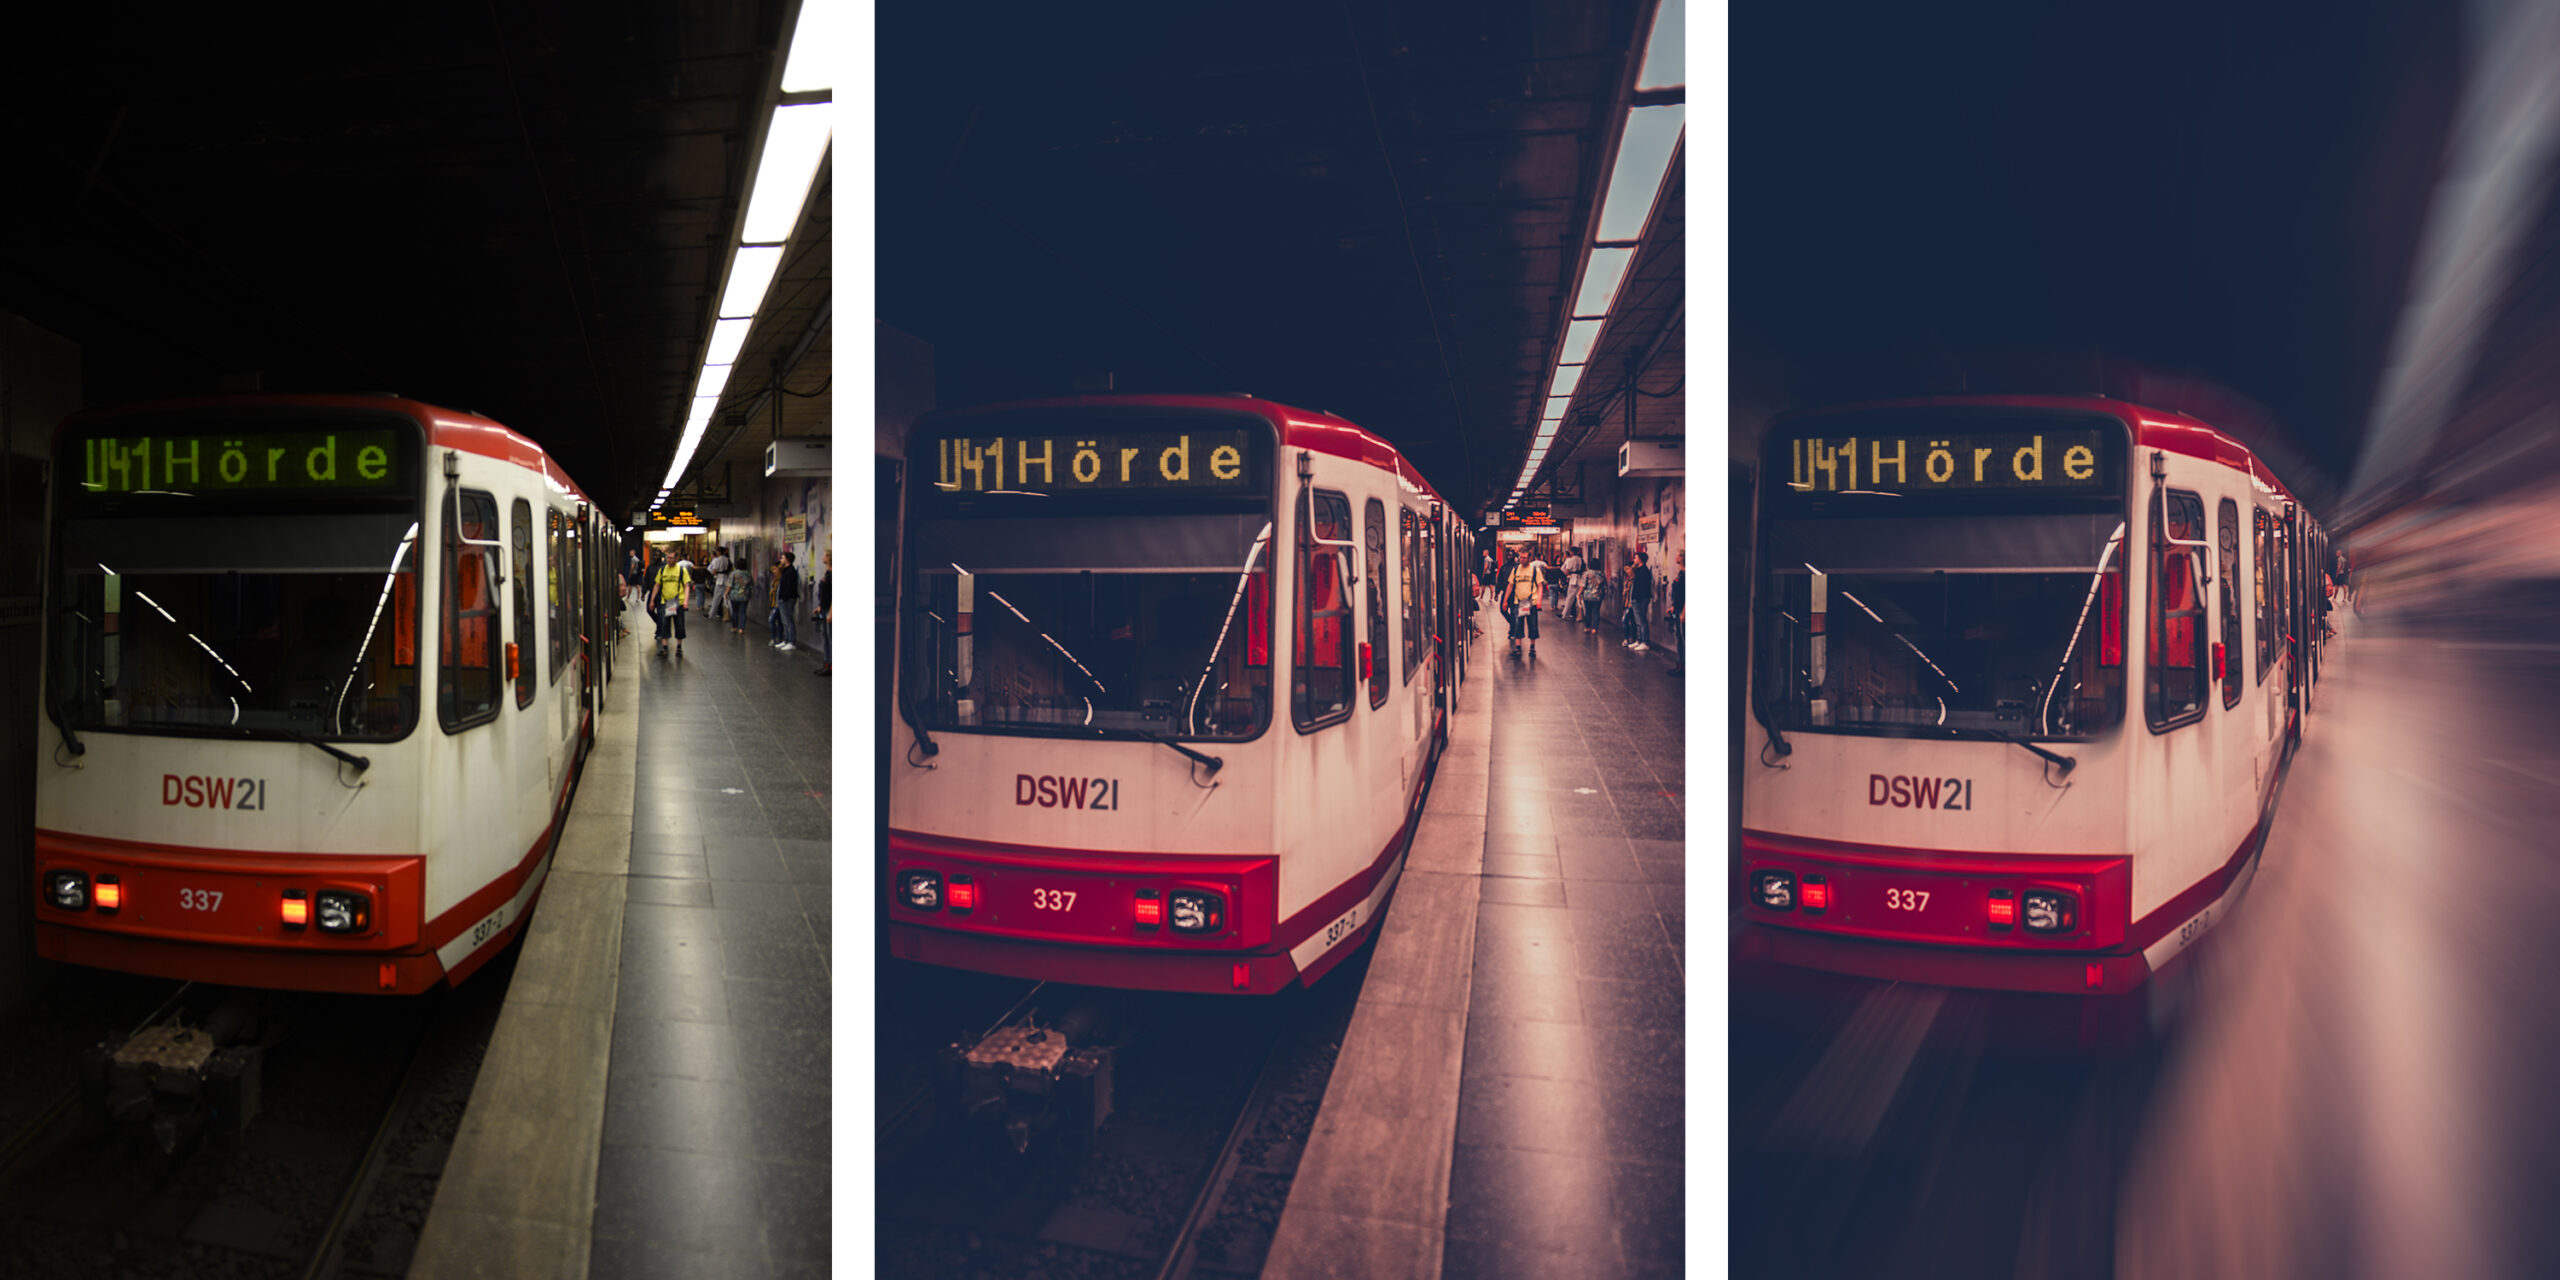 Offeneblende - Dortmund - U-Bahn